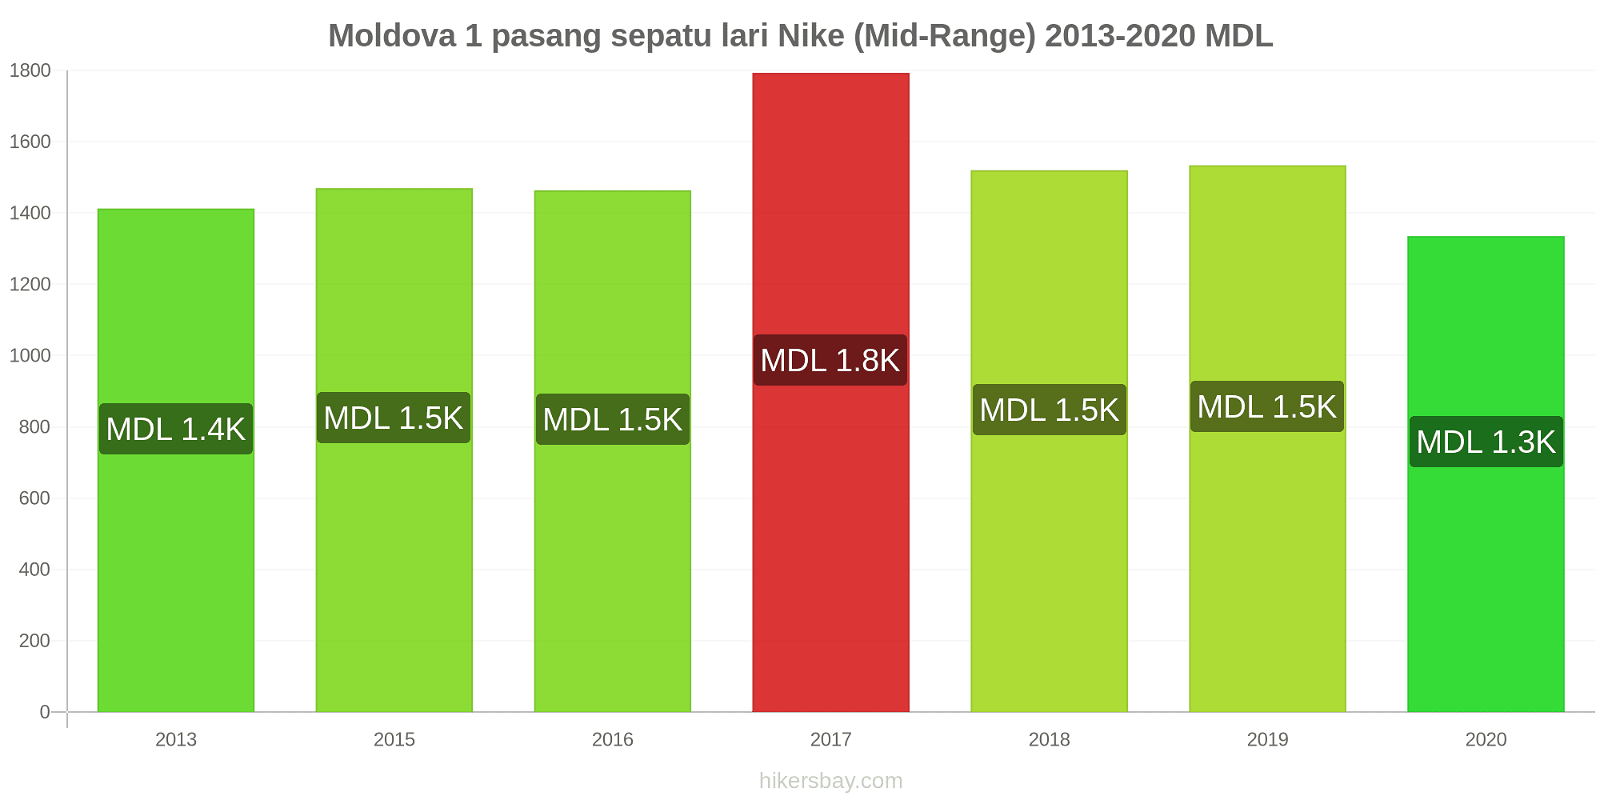 Moldova perubahan harga 1 pasang sepatu lari Nike (Mid-Range) hikersbay.com